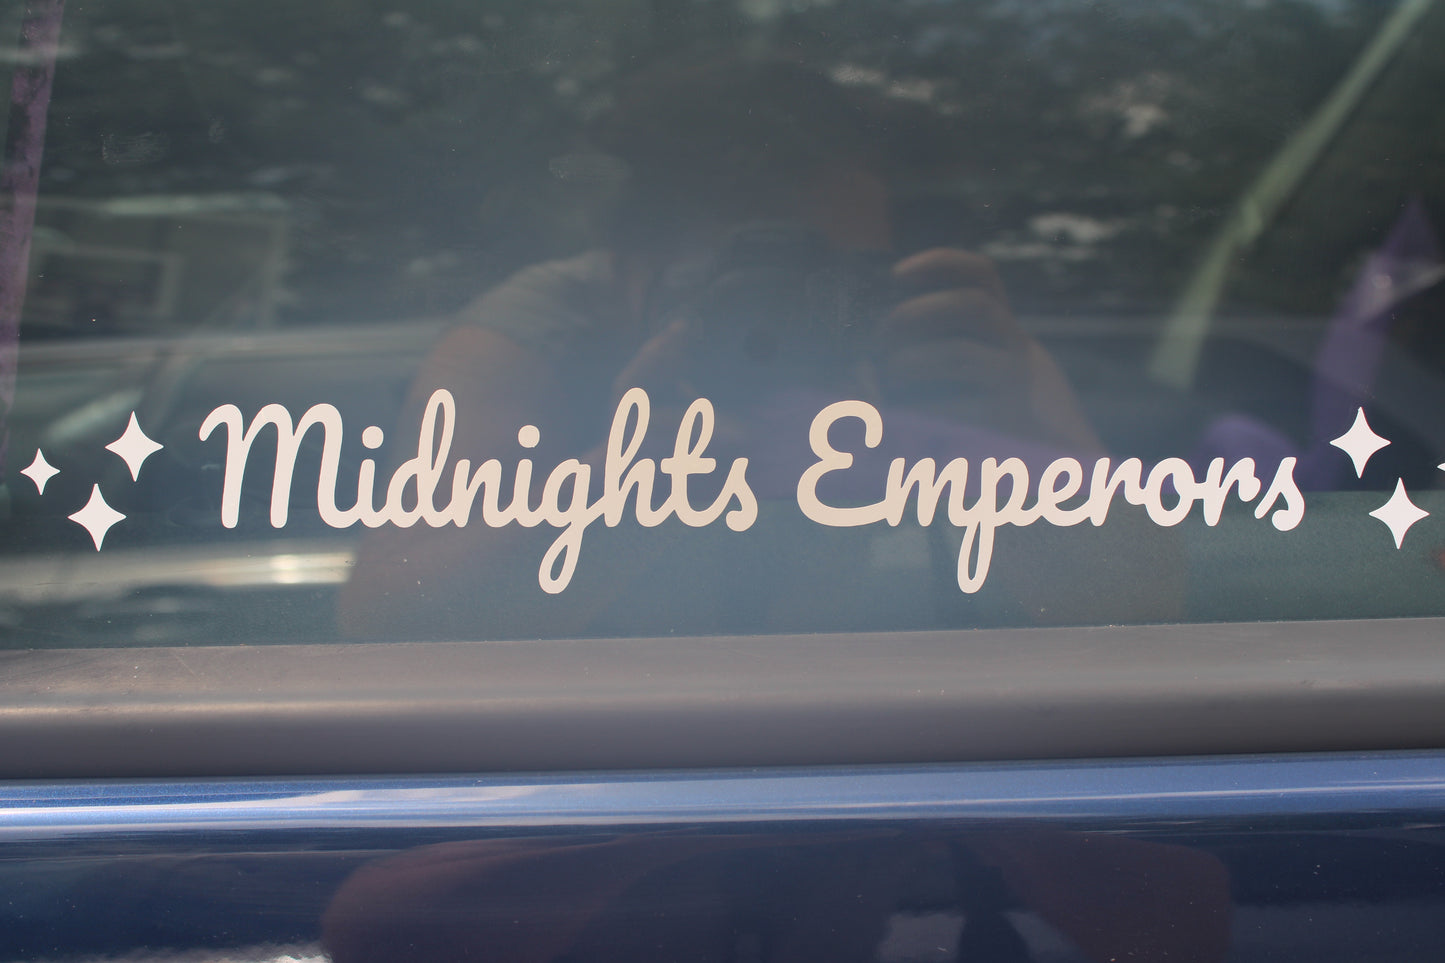 Midnight’s Emperors Small Vinyl Decal